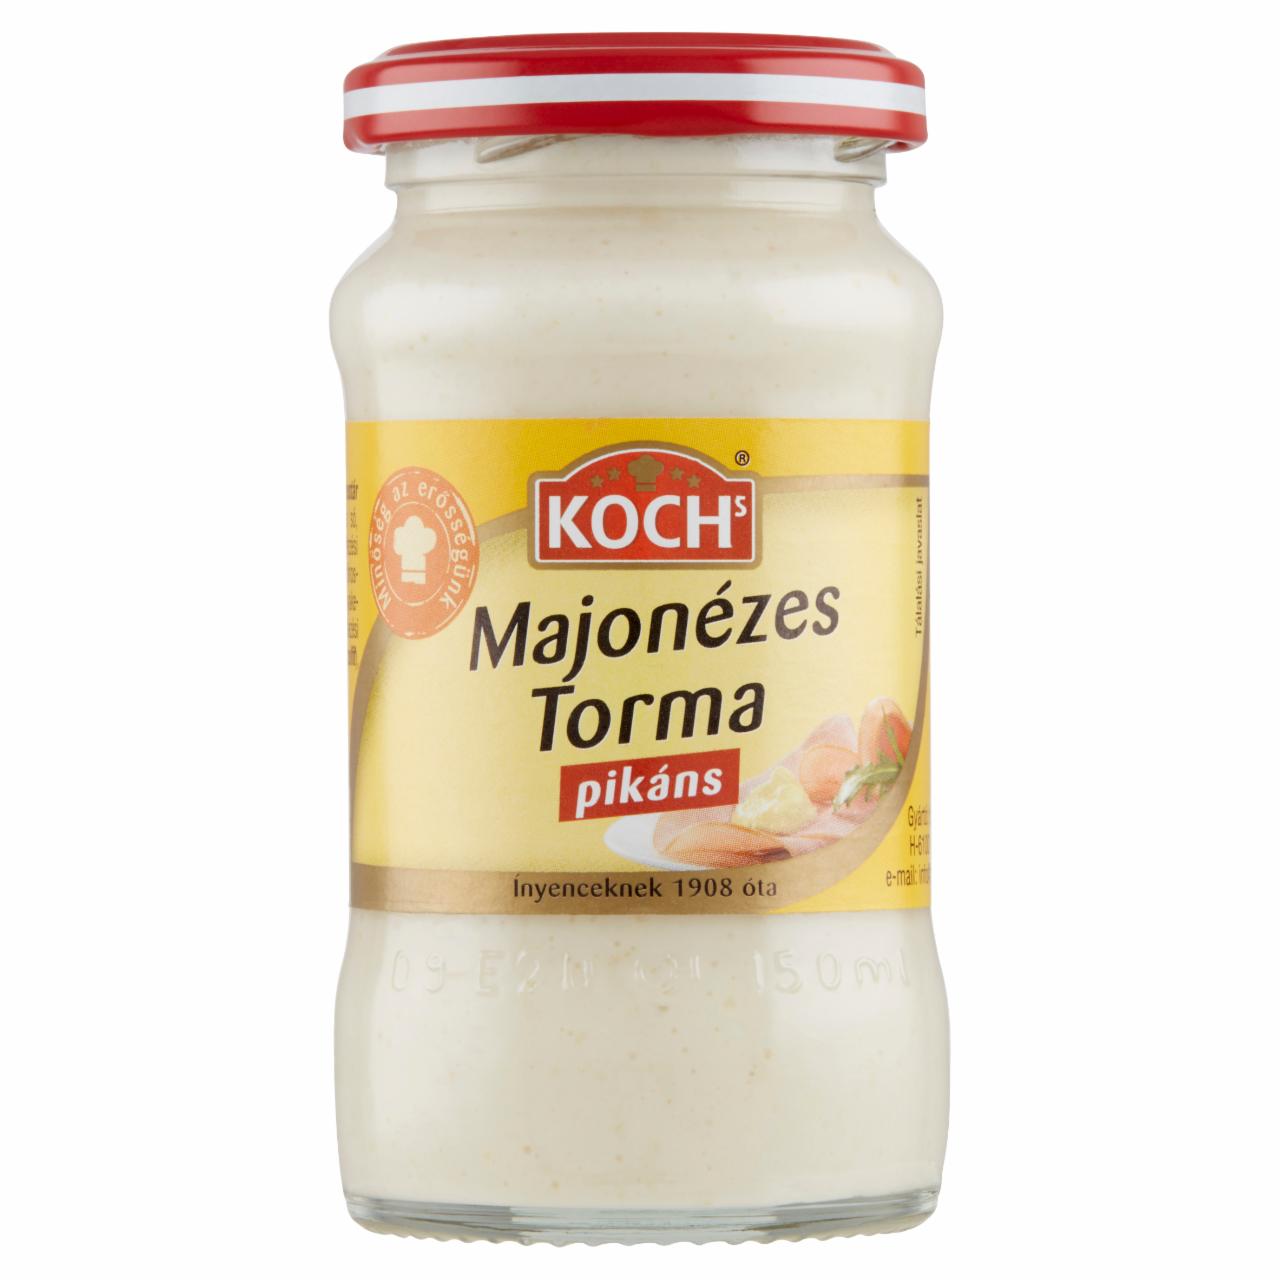 Képek - Koch's pikáns majonézes torma 140 g